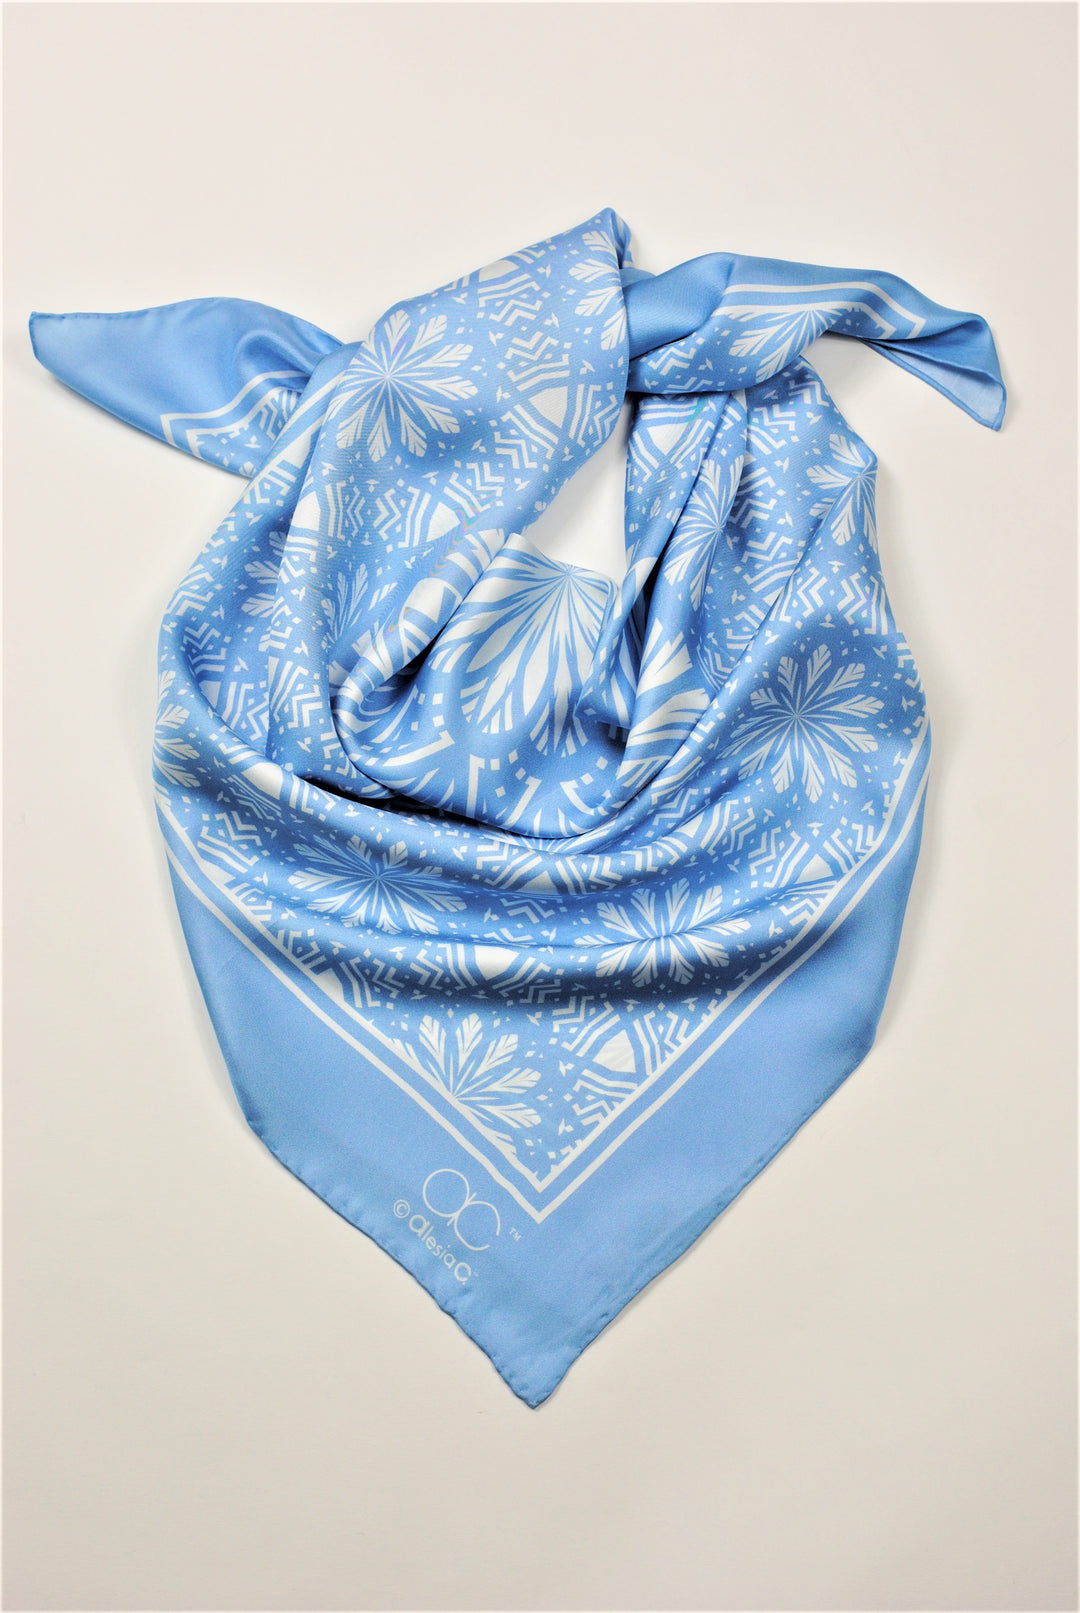 SERENITY Mandala Art Pure Silk Charmeuse Scarf in Light Blue and White Serenity Blue by Alesia Chaika designer scarf in the signature Alesia C. triangle purple gift box